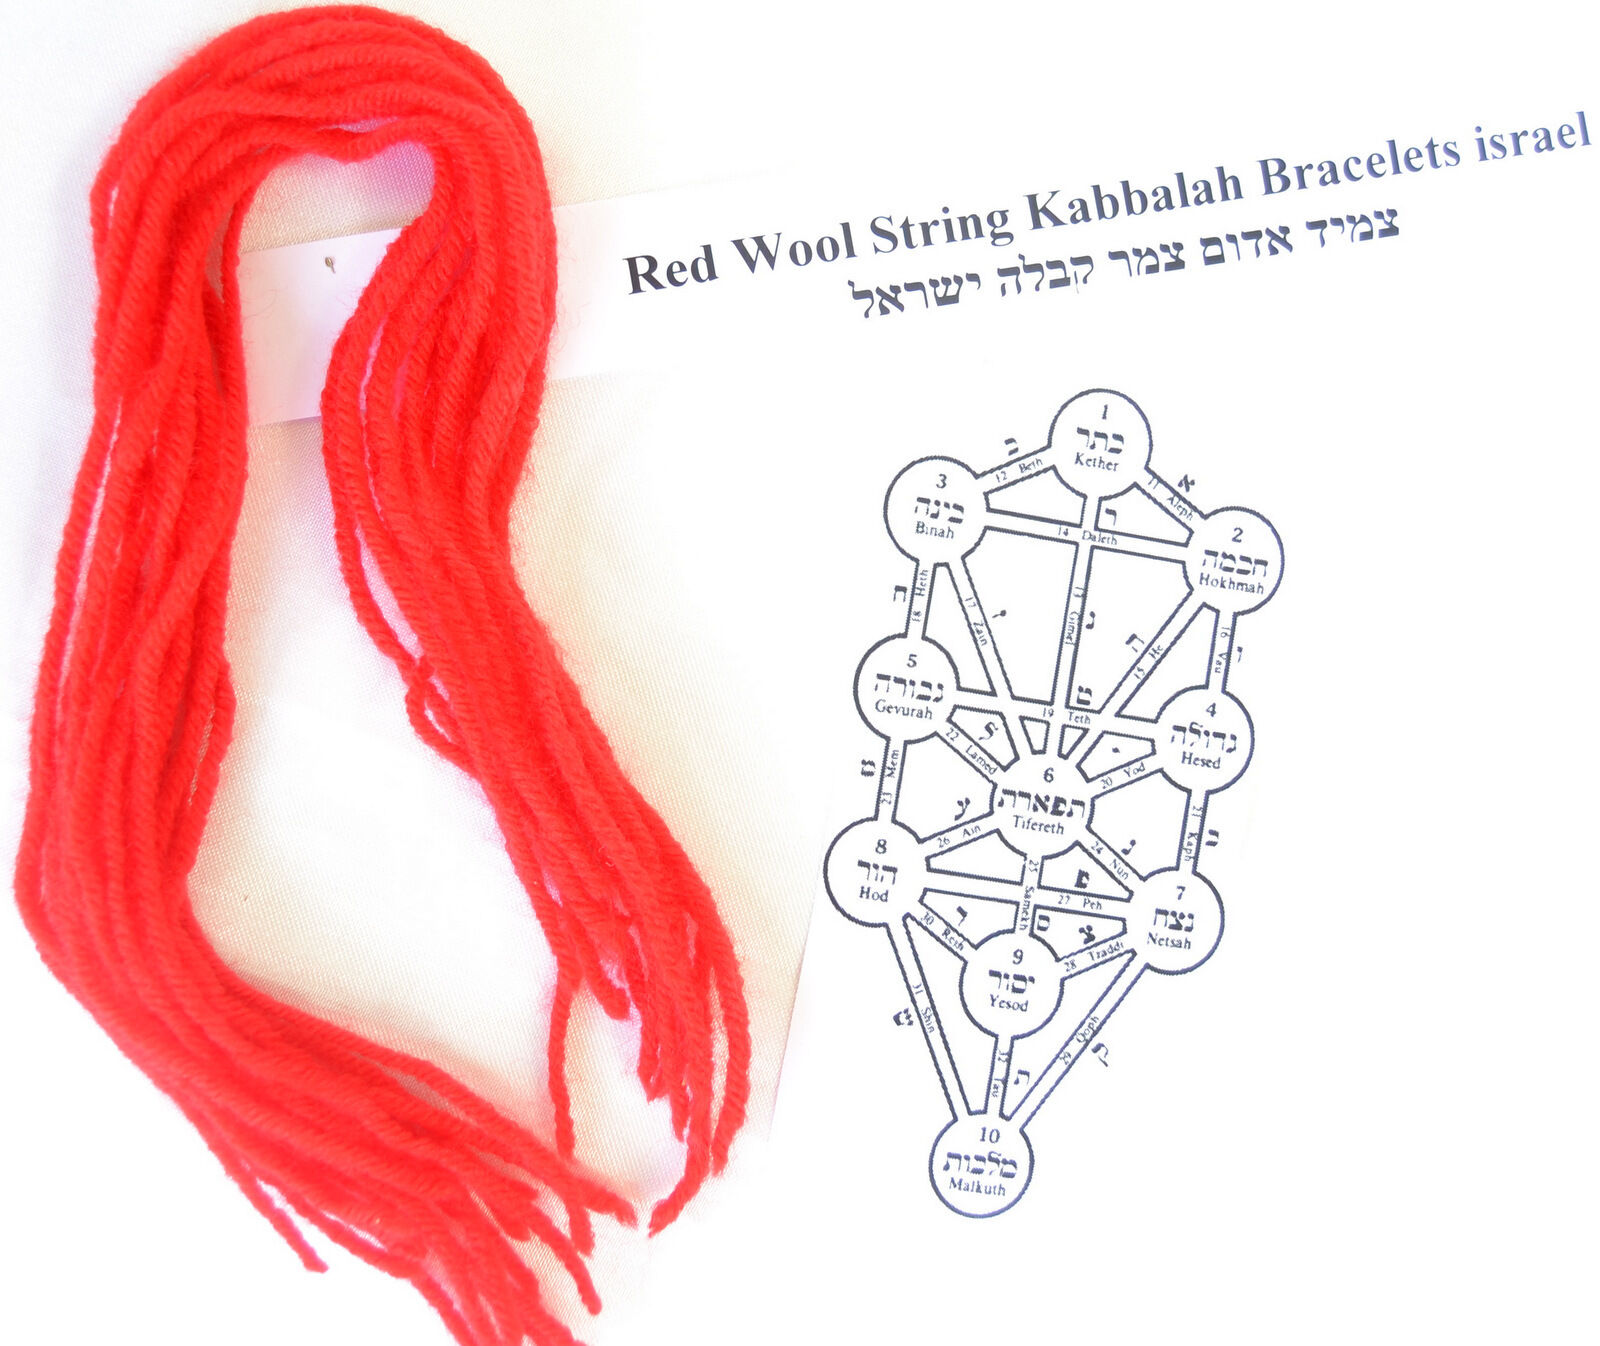 Lot 12+3 Red Wool String Kabbalah Bracelets against Evil Eye israel Blessed S10\